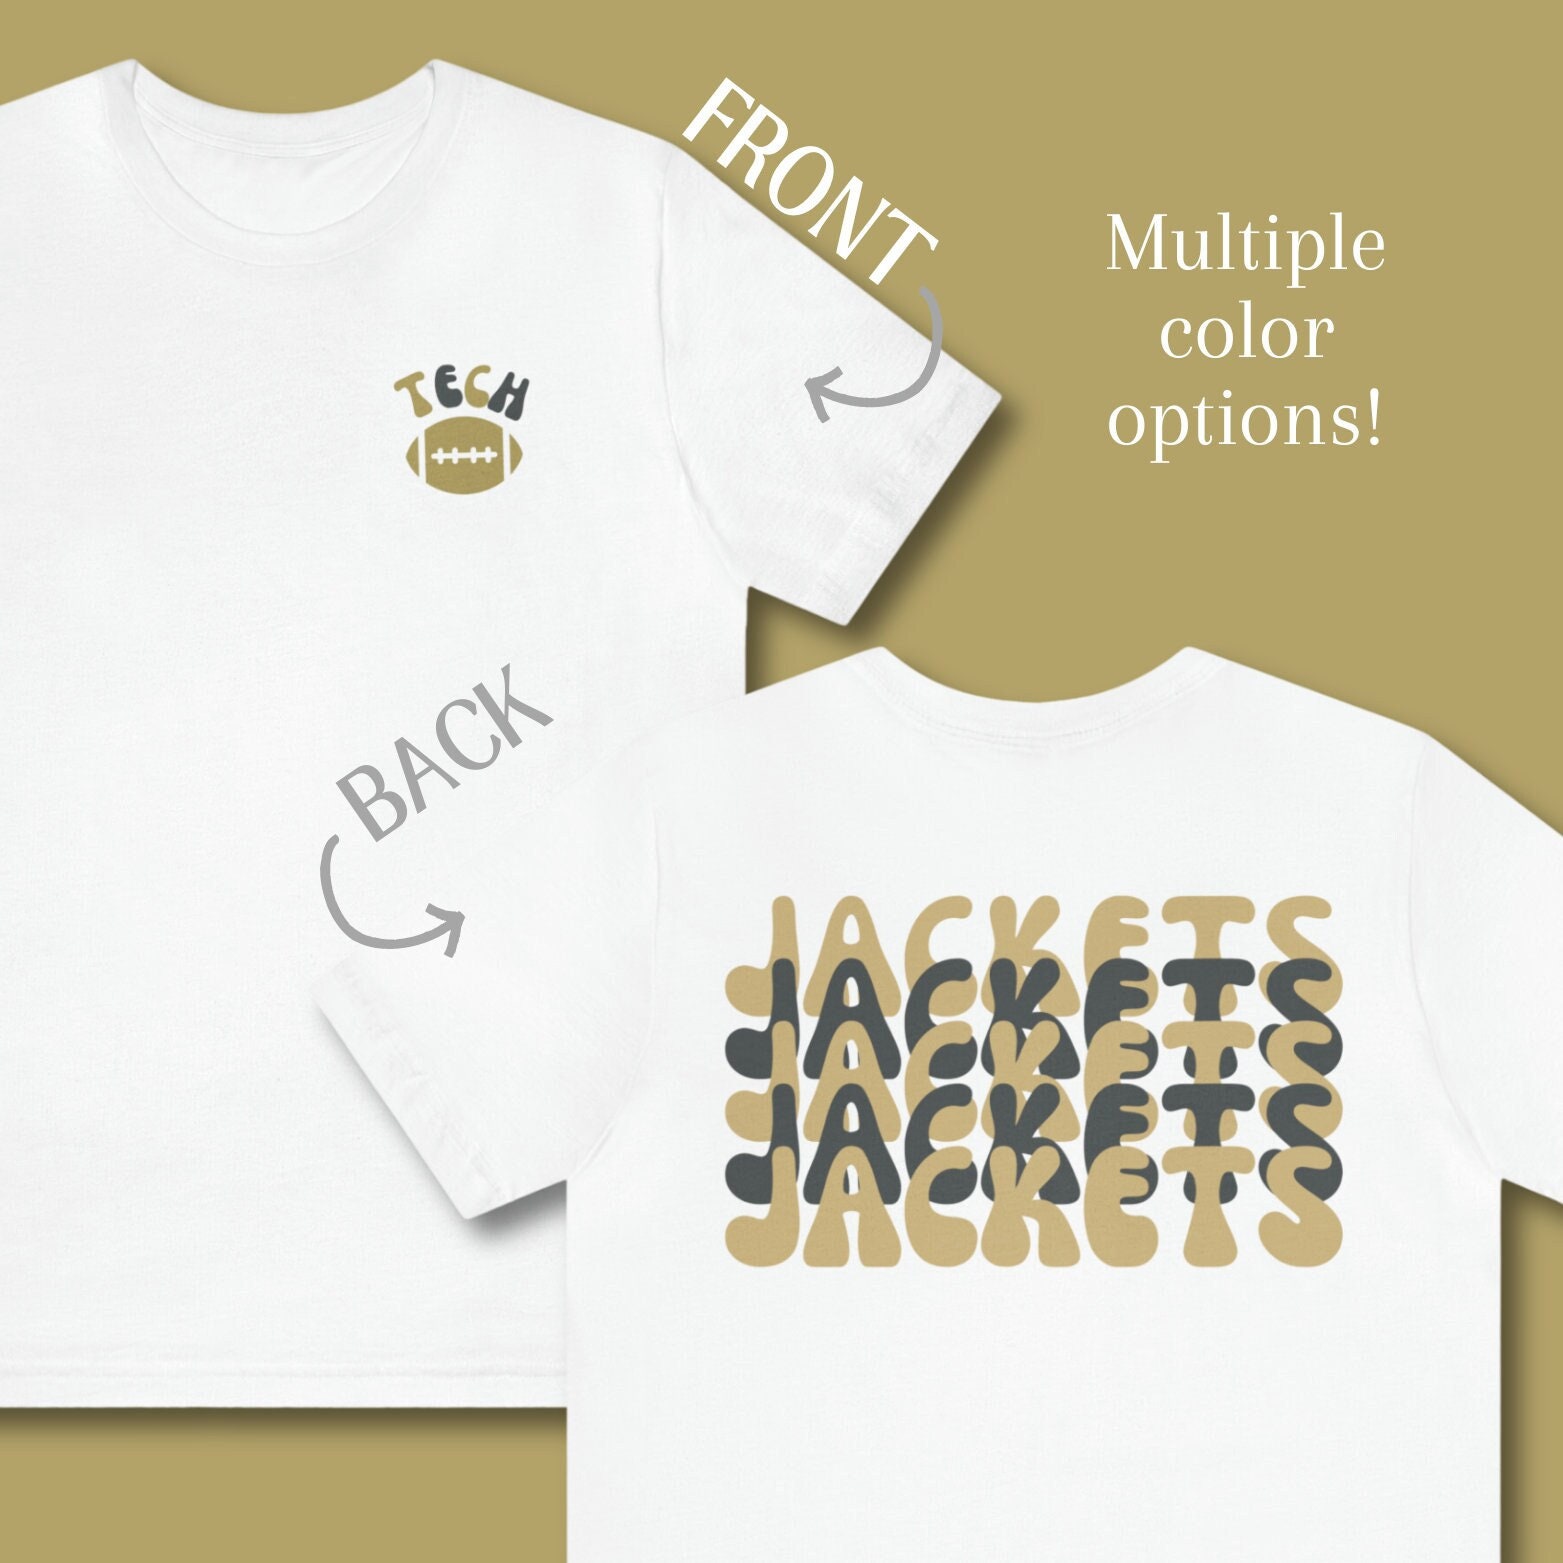 Vintage 80s Georgia Tech Hornets Yellow Graphic T Shirt Unisex Medium –  Black Shag Vintage